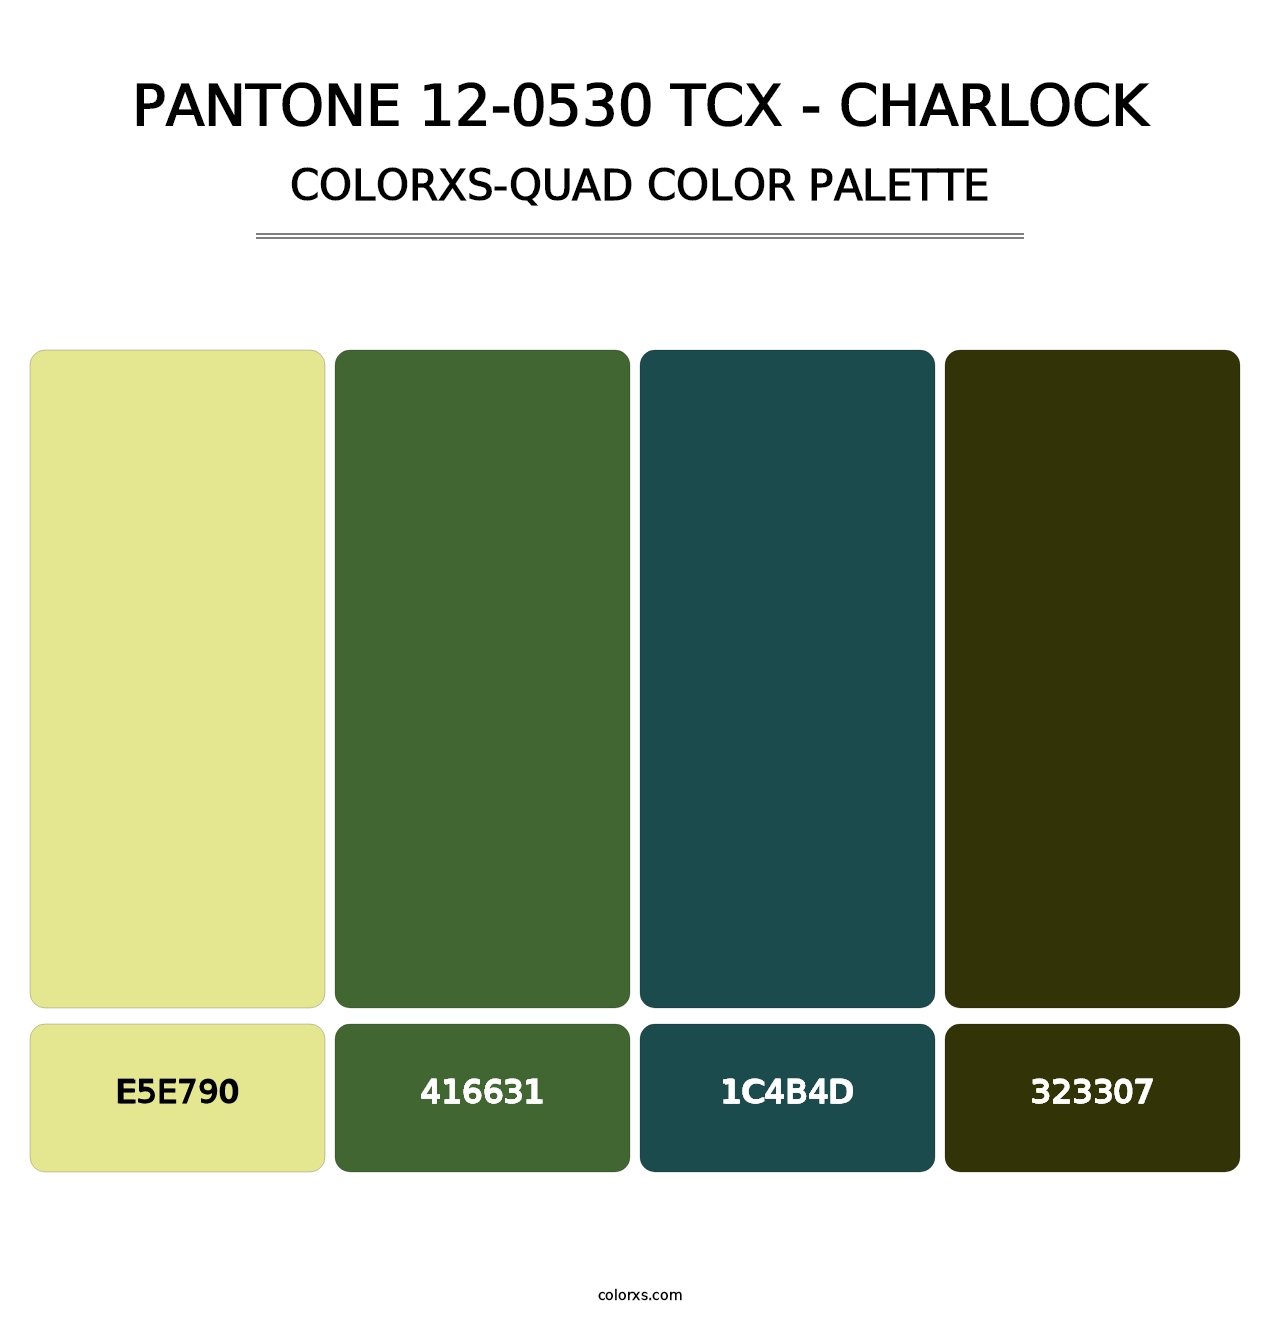 PANTONE 12-0530 TCX - Charlock - Colorxs Quad Palette